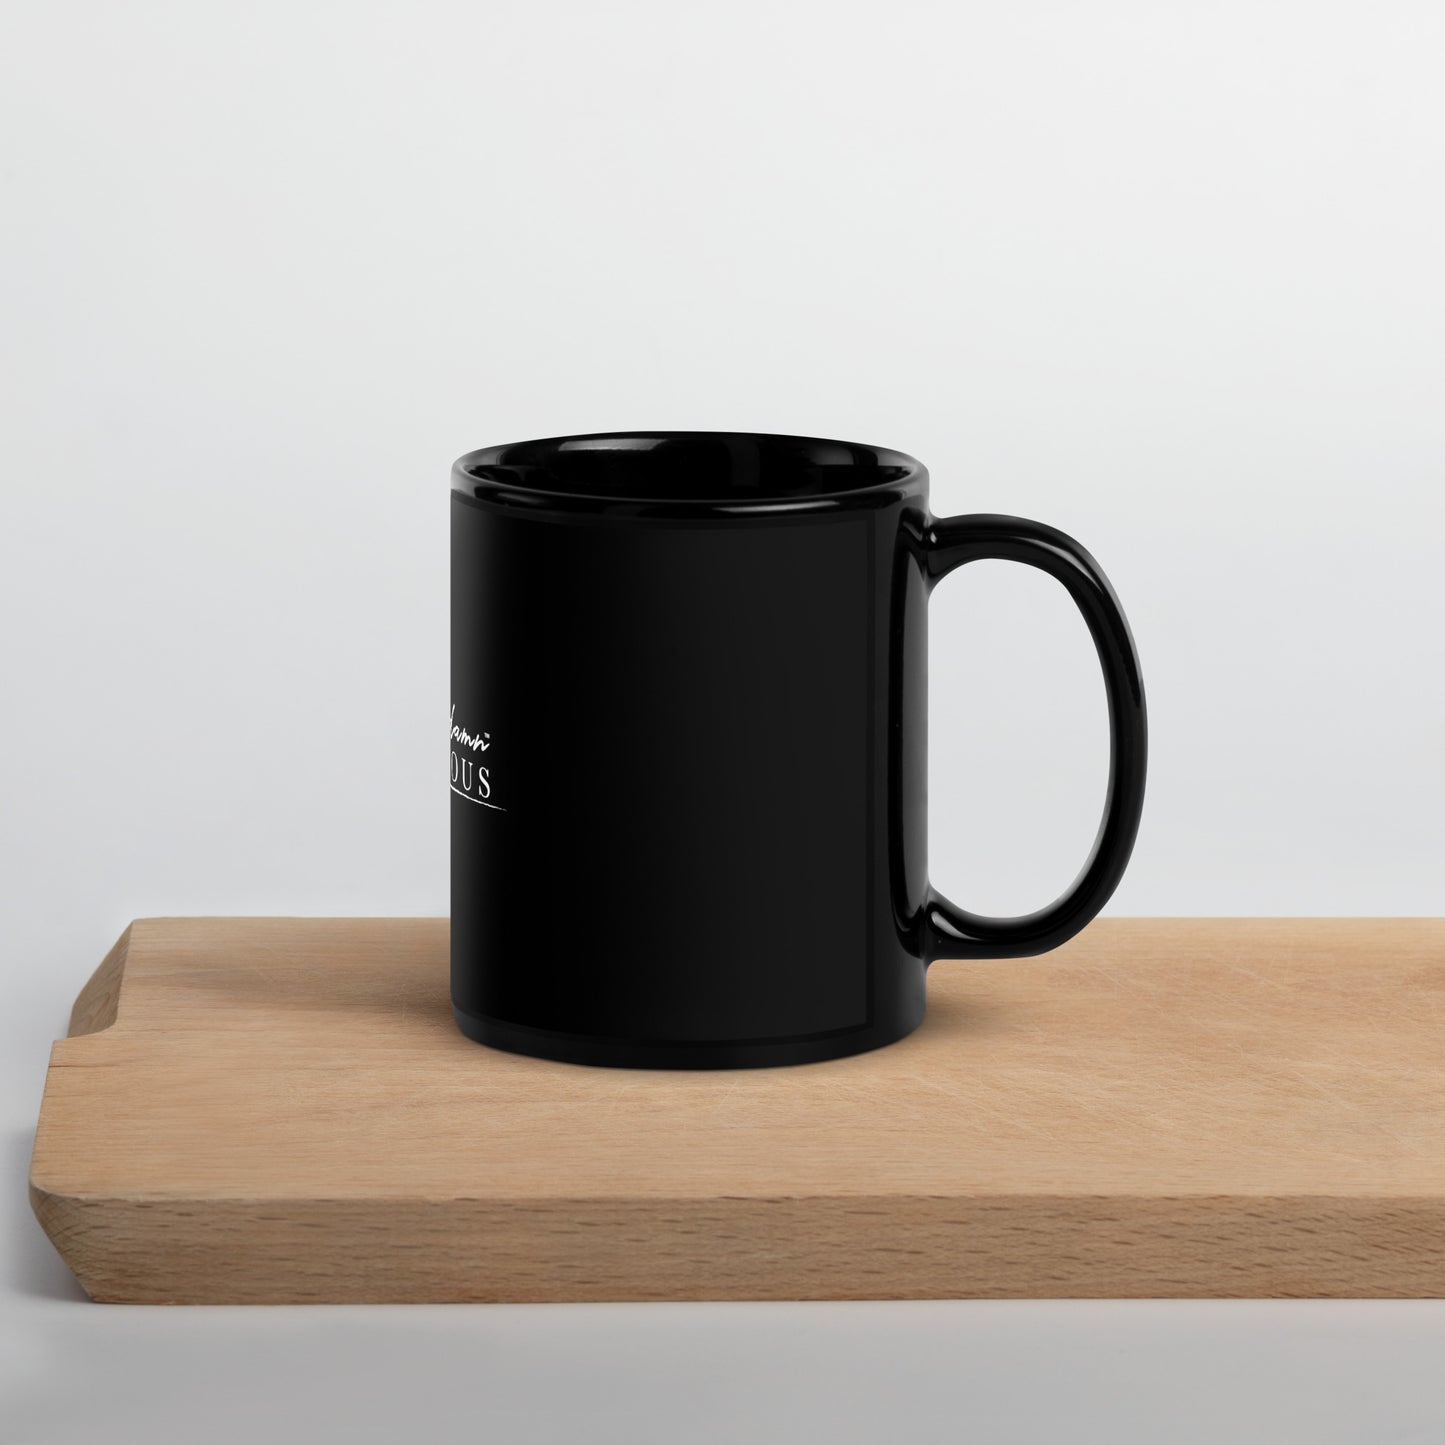 Pretty Damn Ambitious™ Black Glossy Mug